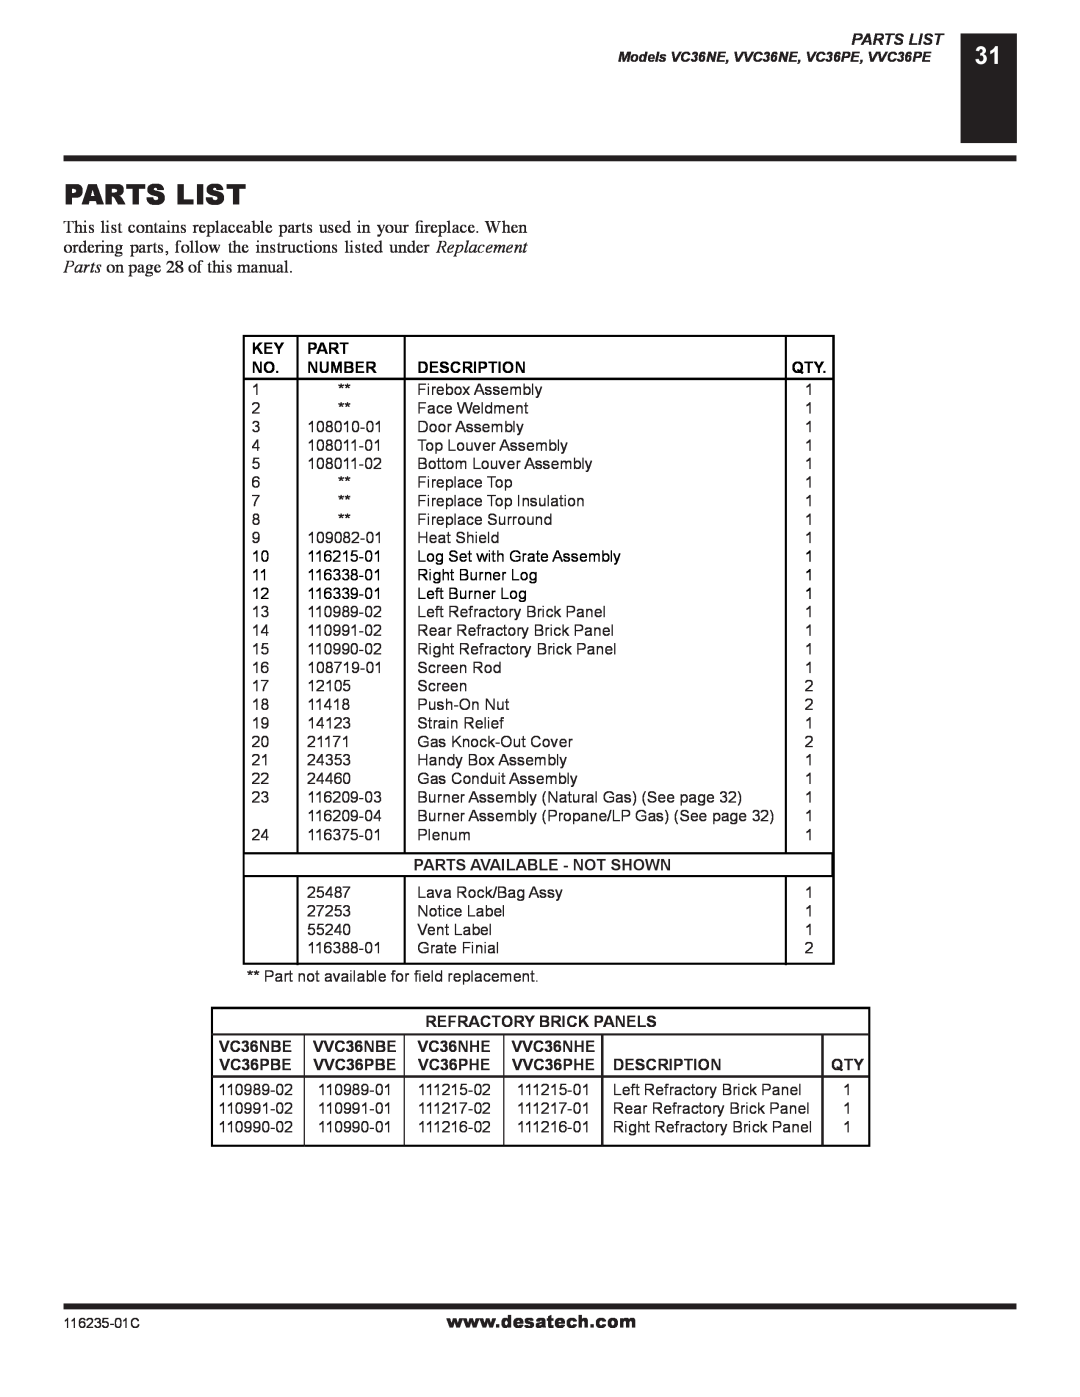 Desa (V)VC36PE, (V)VC36NE installation manual Parts List 